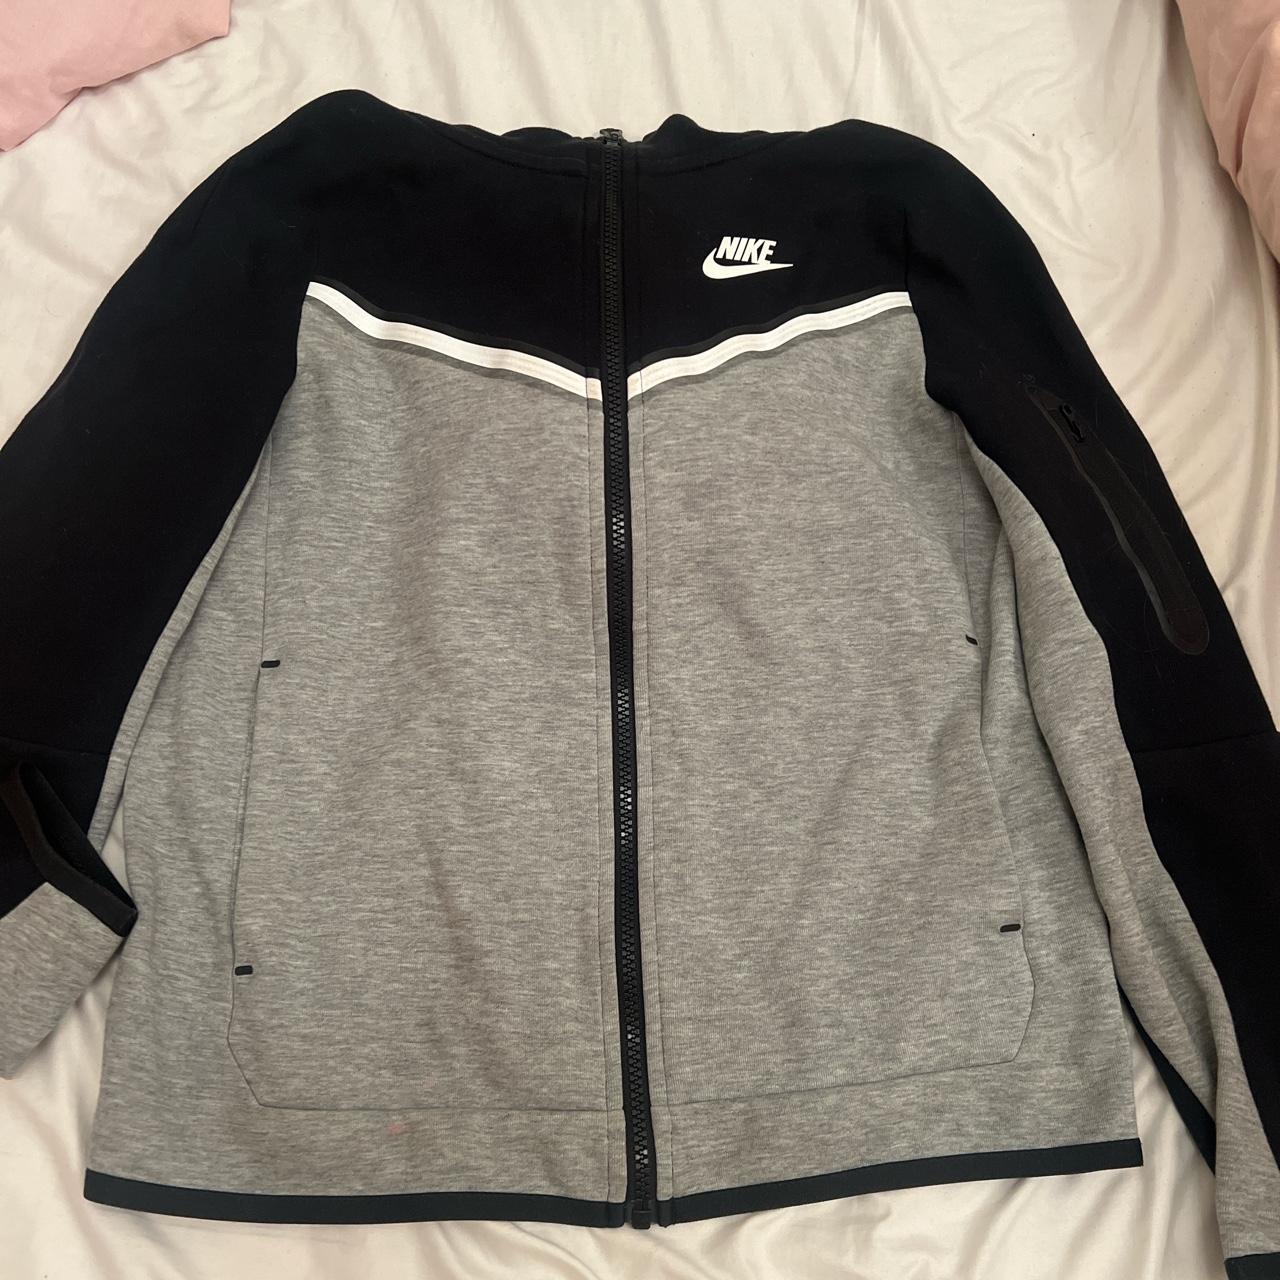 Nike tech fleece grey and black size L good... - Depop